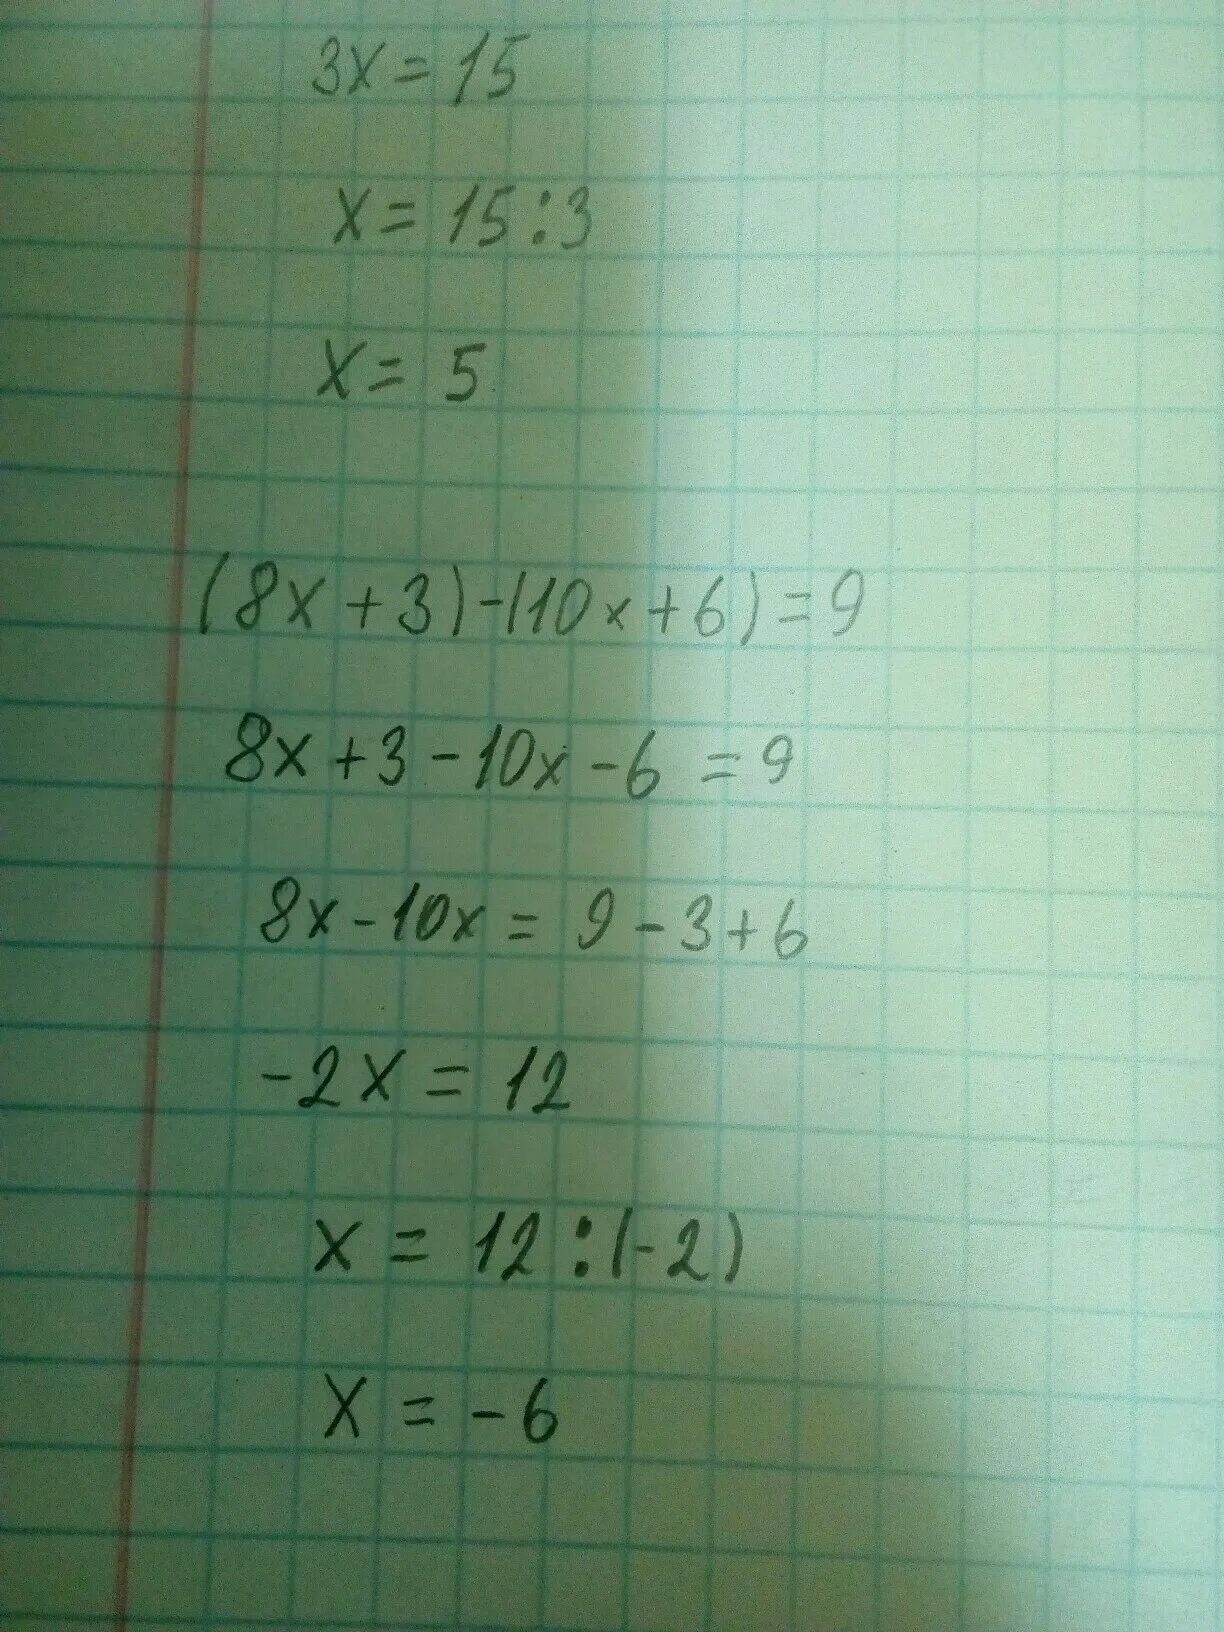 15 x 10 6 x 8. (10-X)(10+X). (8x+3)-(10x+6)=9. (2x-10)-(3x-4)=6. 4x-10=x+8 ответ.